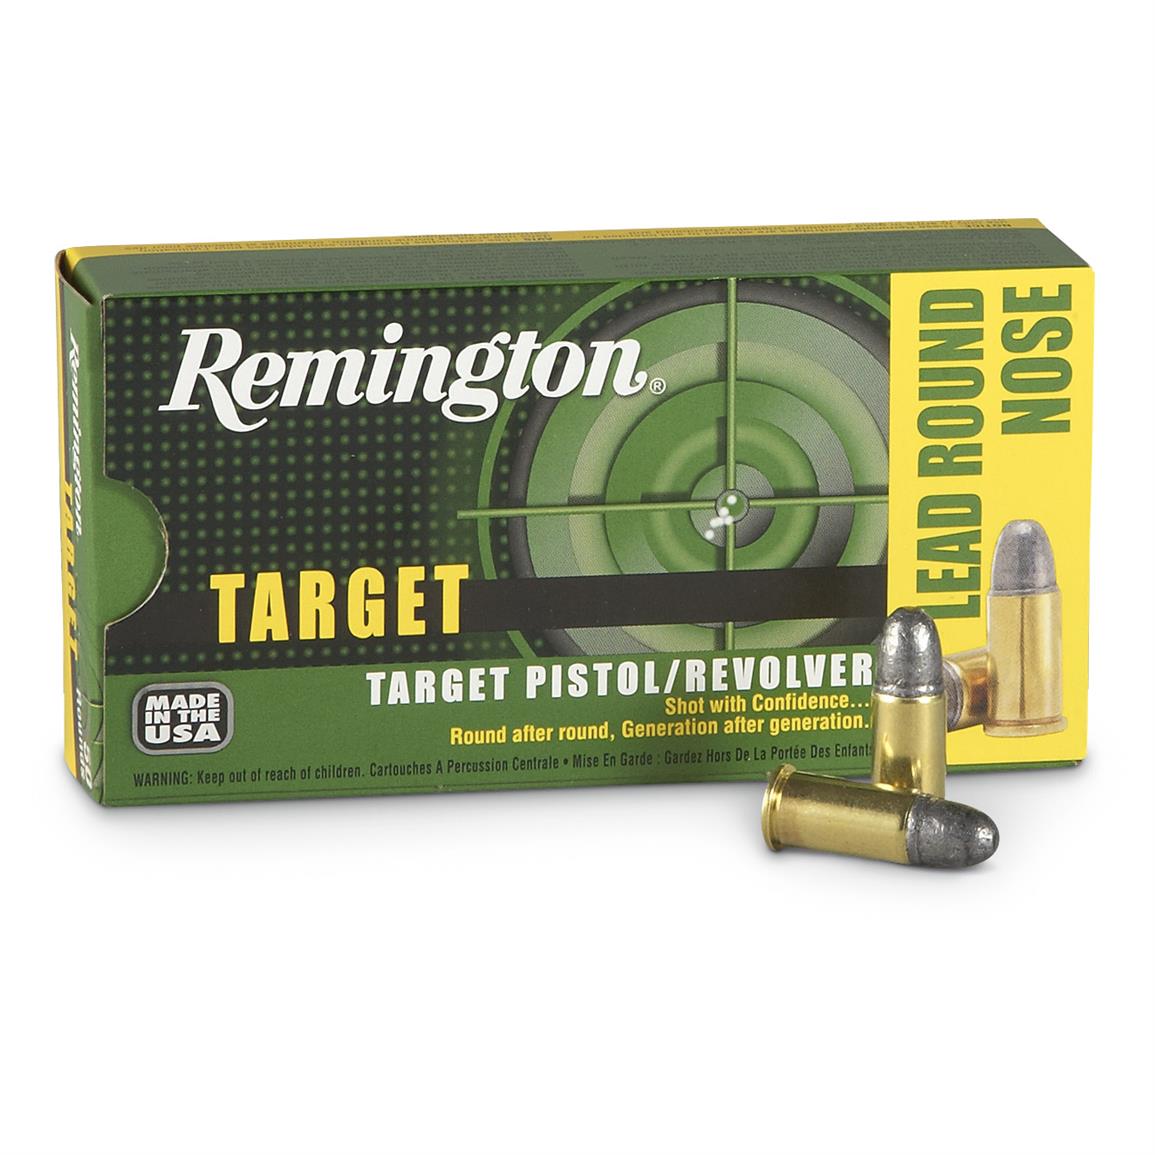 Remington Target Pistol Revolver Ammo 38 Short Colt Lrn 125 Grain 50 Rounds 2145 38 Short Ammo At Sportsman S Guide